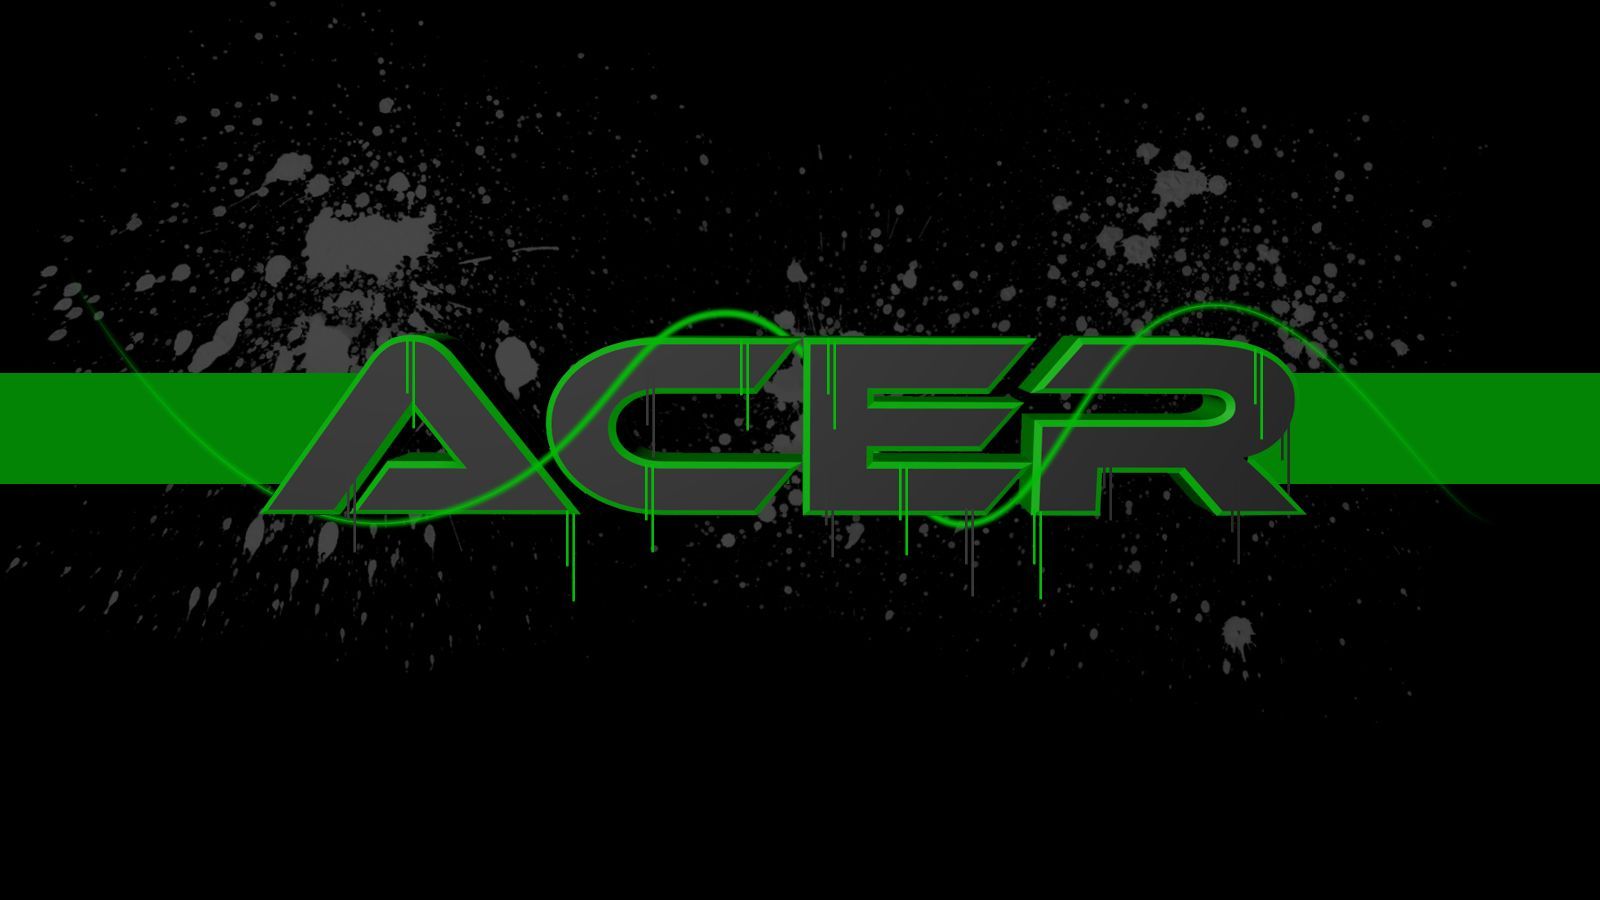 Acer Computer Wallpapers, Desktop Backgrounds 1600x900 ID444552